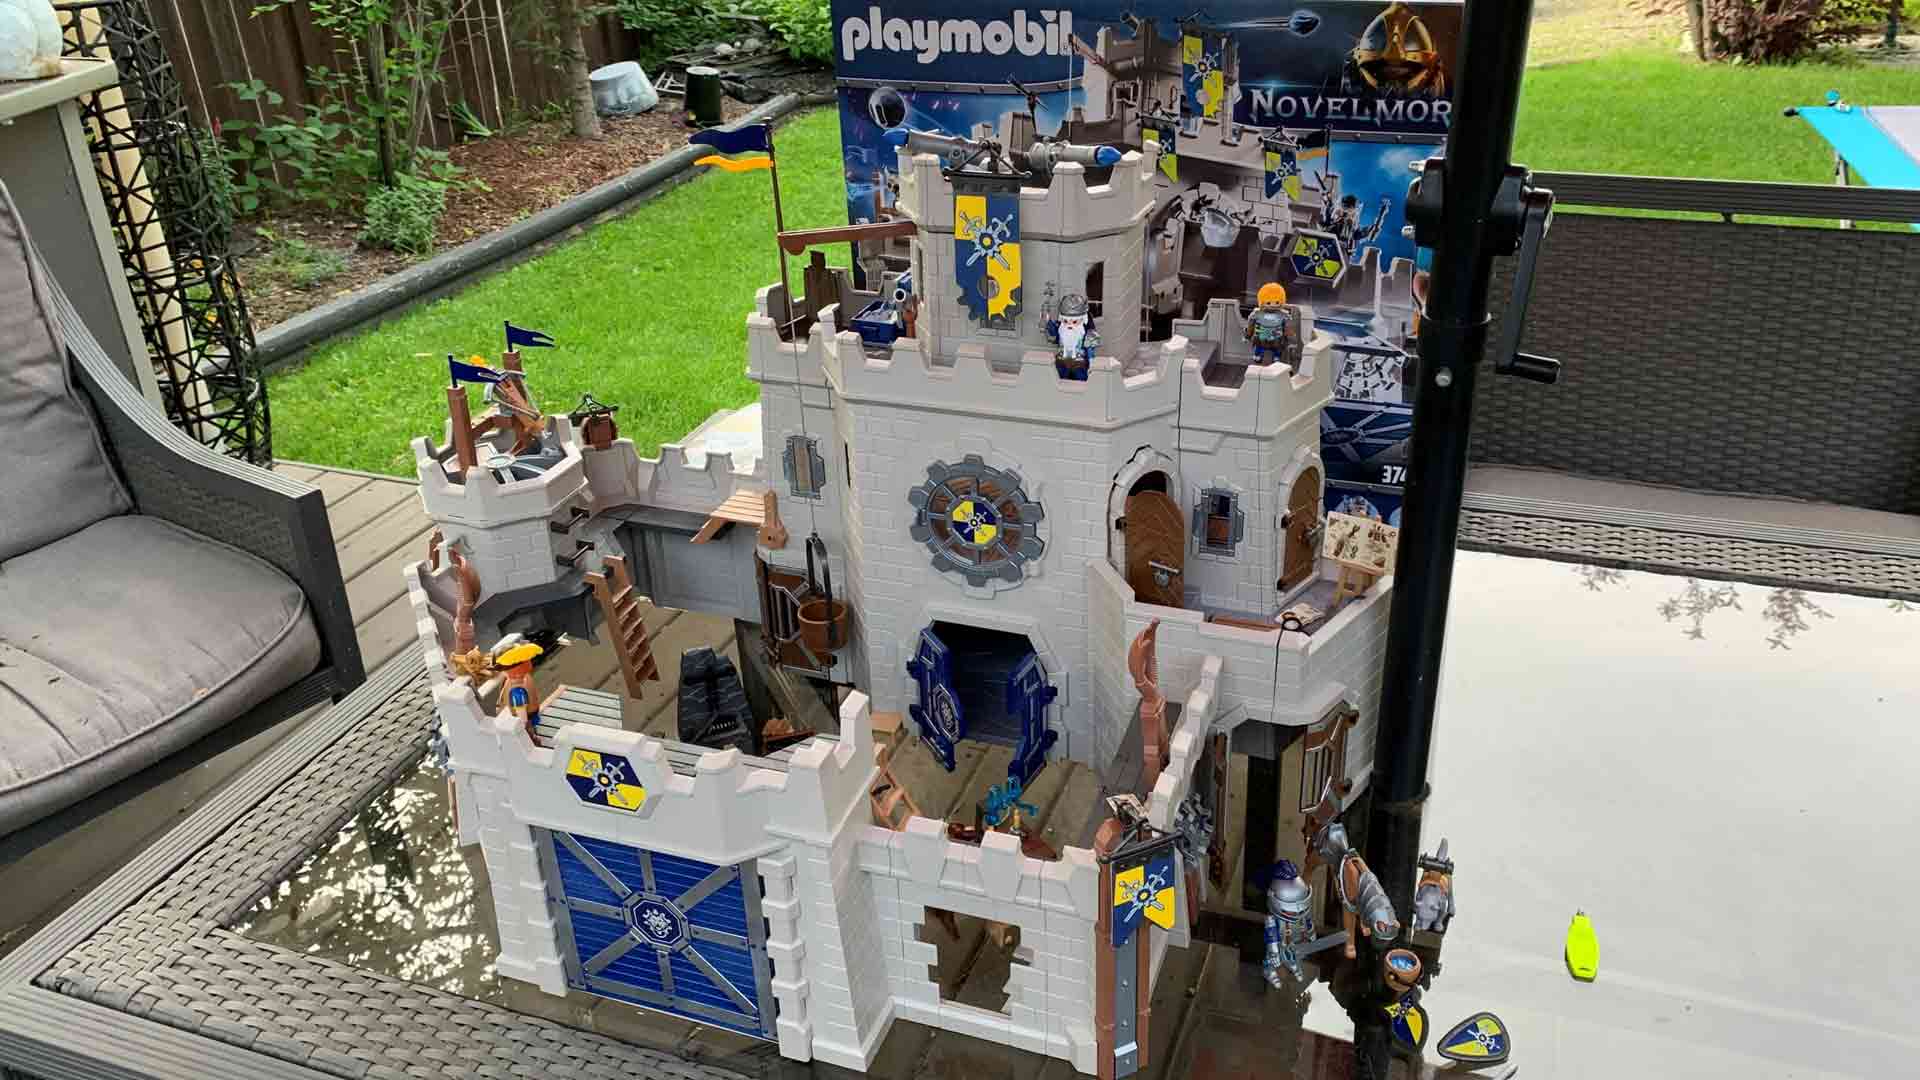 Playmobil Grand Castle of Novelmore Set 70220